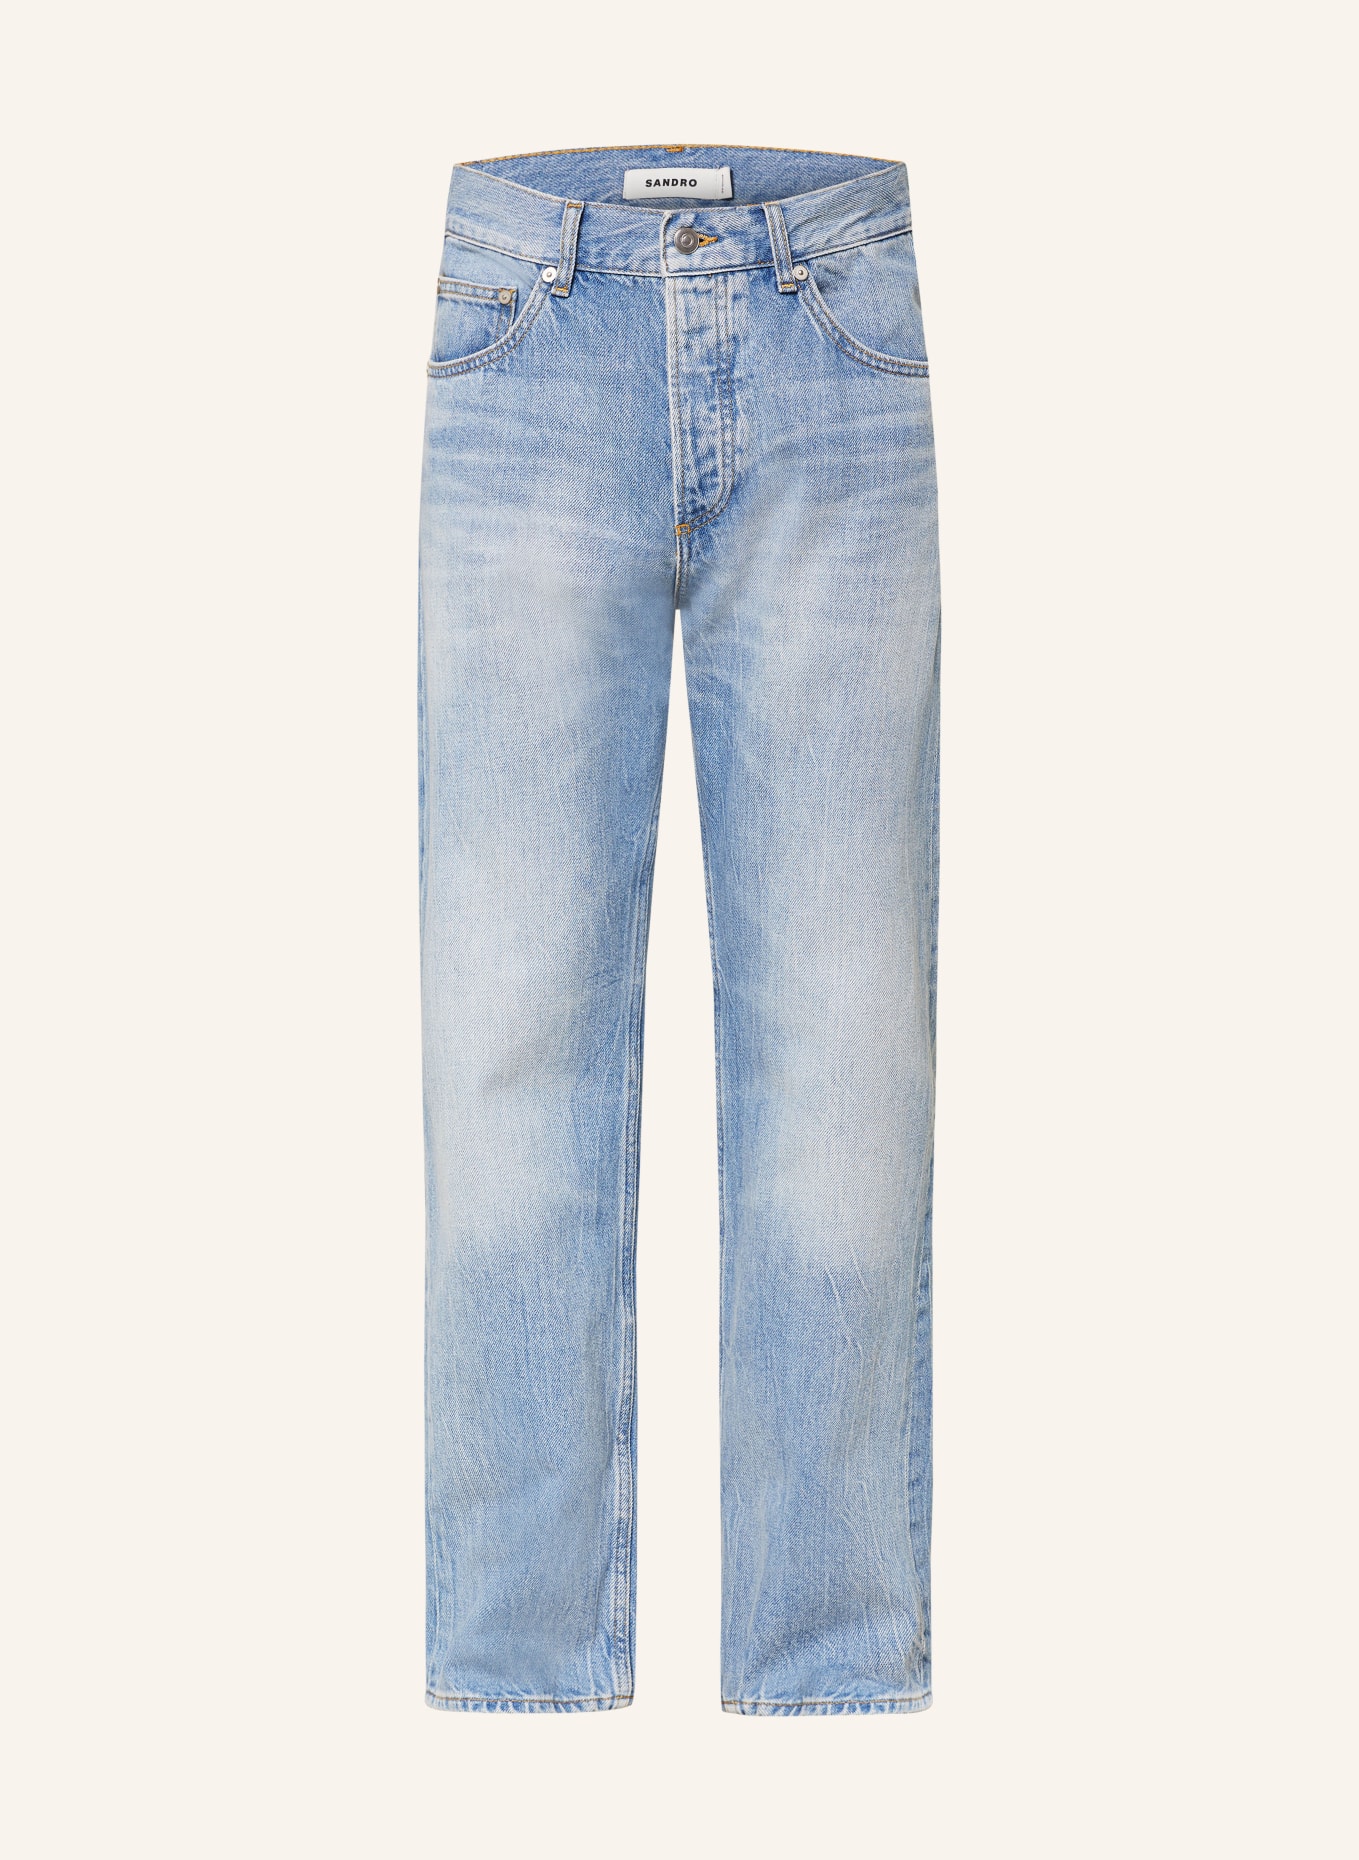 SANDRO Jeans Regular Fit, Farbe: BLUV BLUE VINTAGE - DENIM (Bild 1)